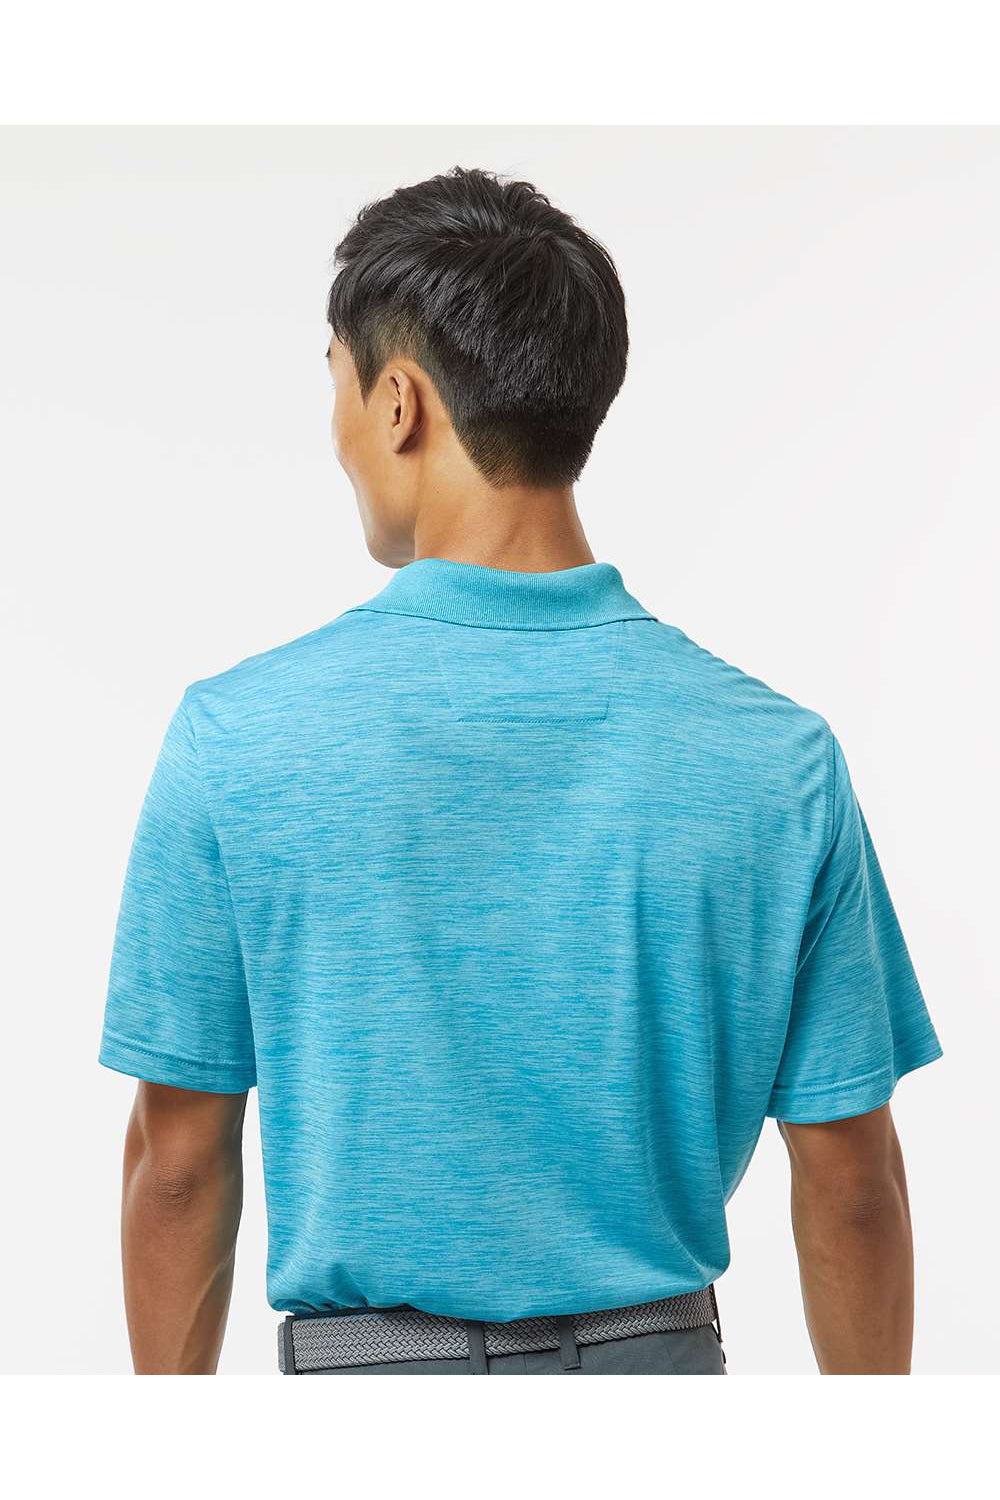 Paragon 130 Mens Dakota Striated Short Sleeve Polo Shirt Heather Turquoise Blue Model Back